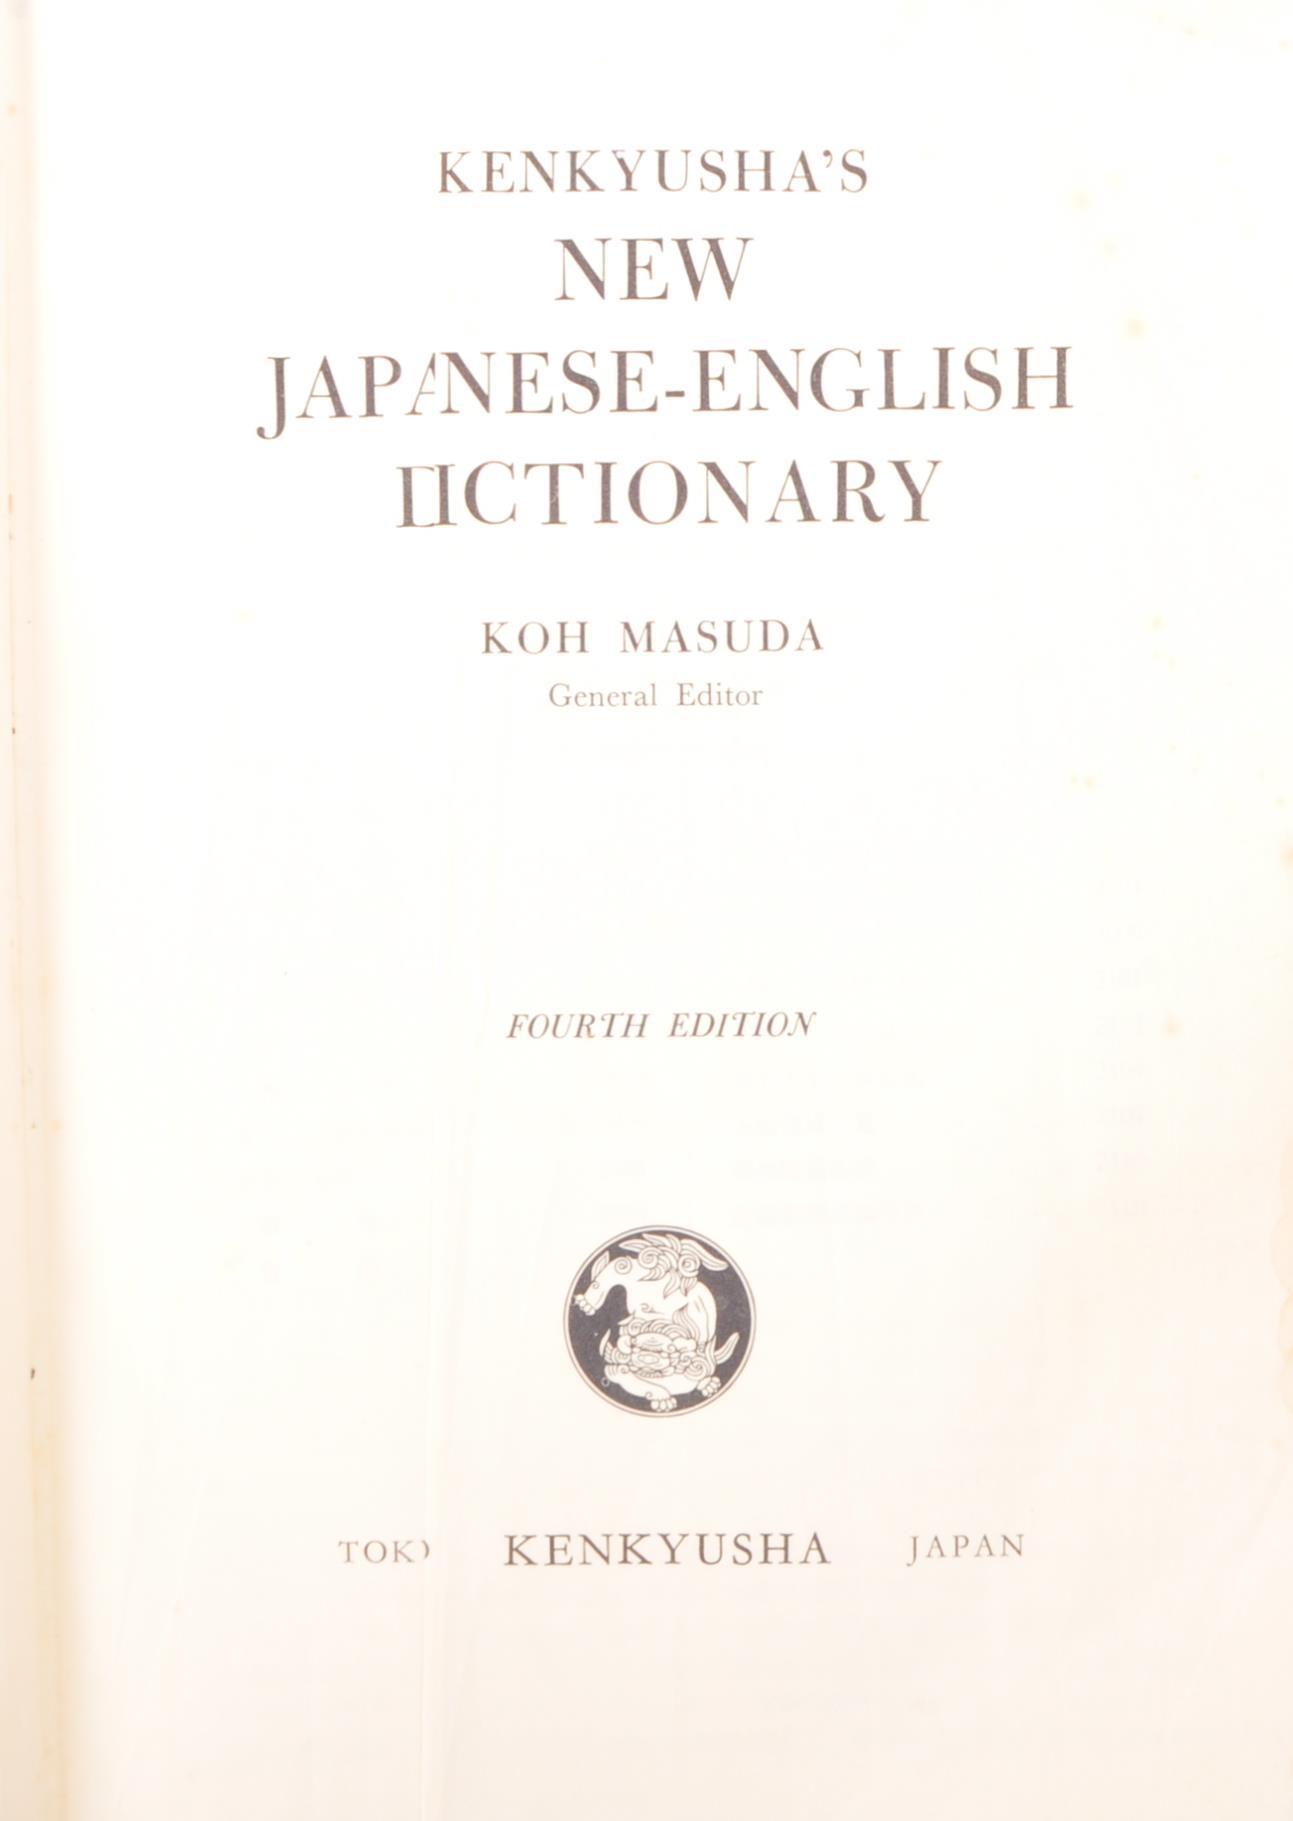 PAIR OF JAPANESE - ENGLISH DICTIONARIES / BOOKS BY KENKYUSHA - Image 3 of 9